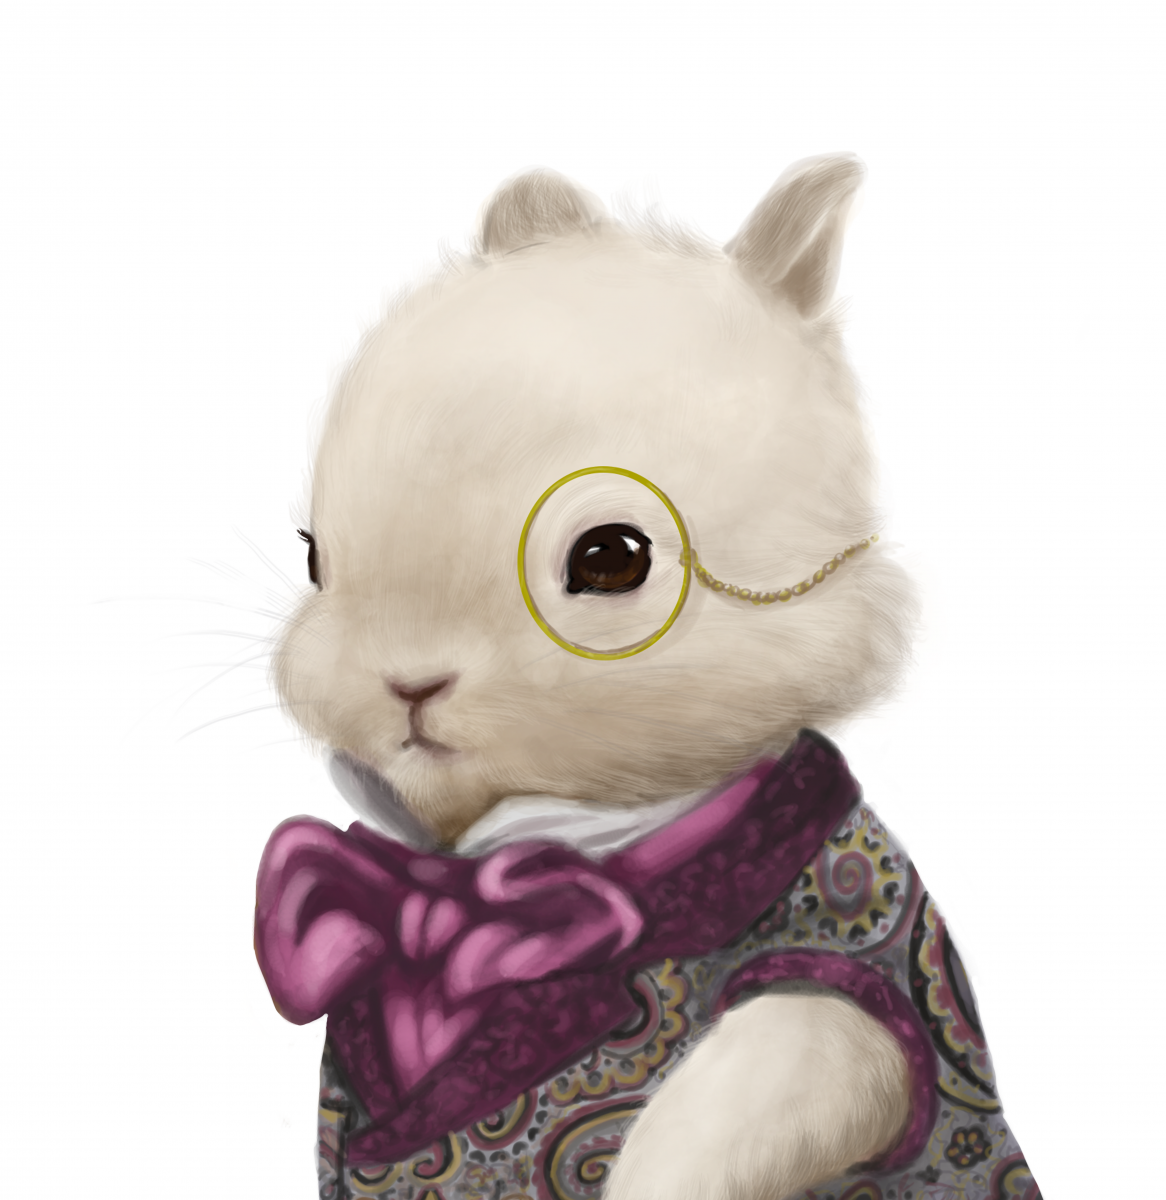 Dapper bunny portrait illustration